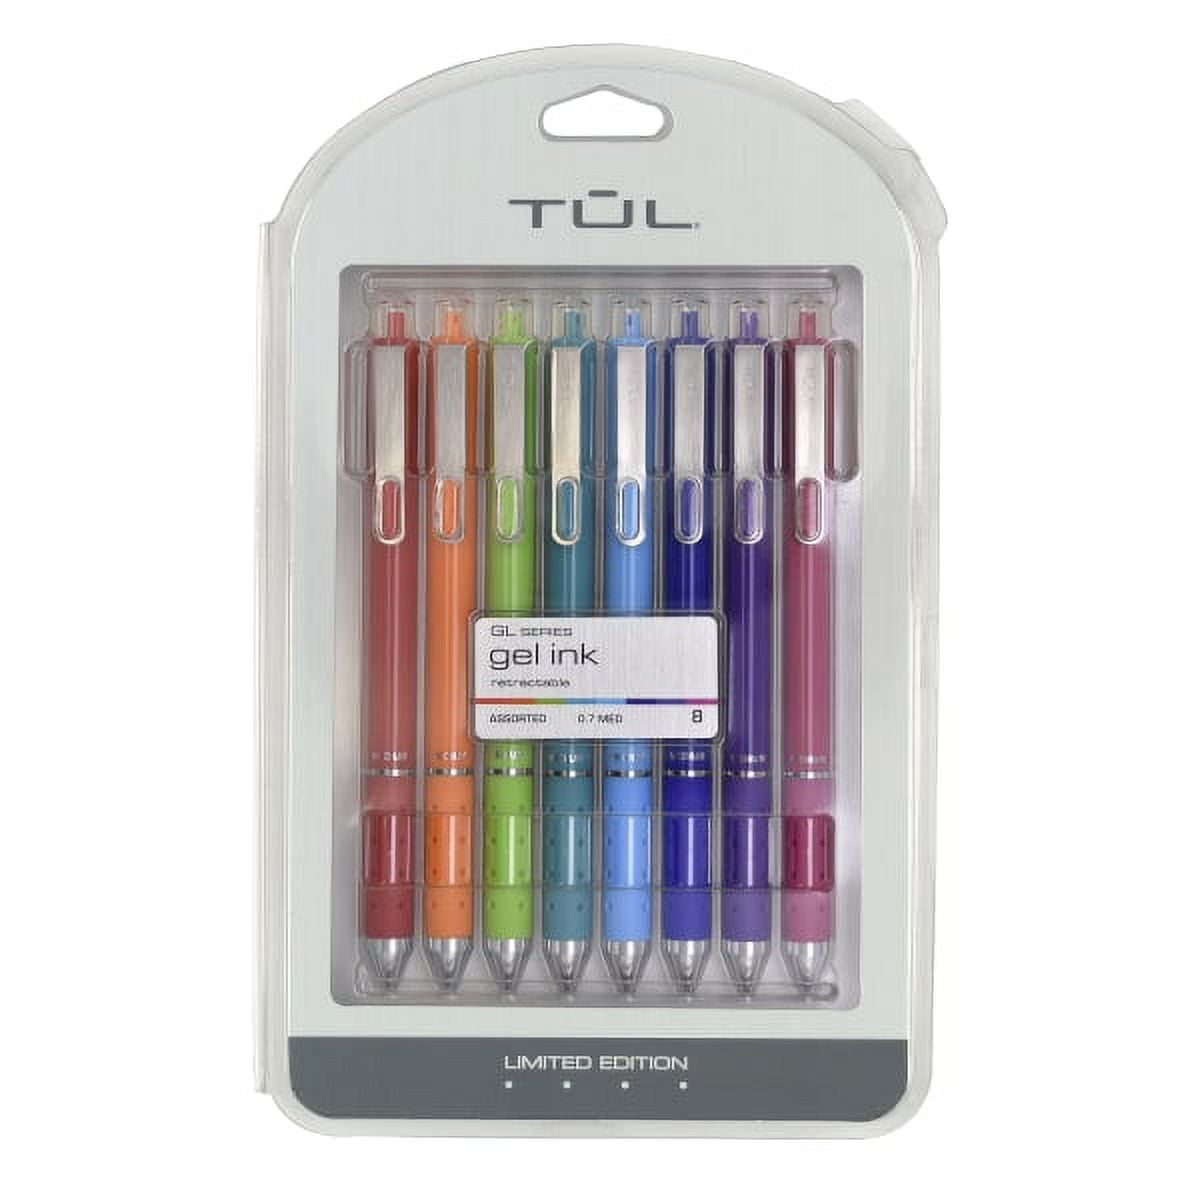 Paper Mate InkJoy Retractable Gel Pens Fine Point 0.5 mm Black Barrels  Assorted Ink Colors Pack Of 6 - Office Depot